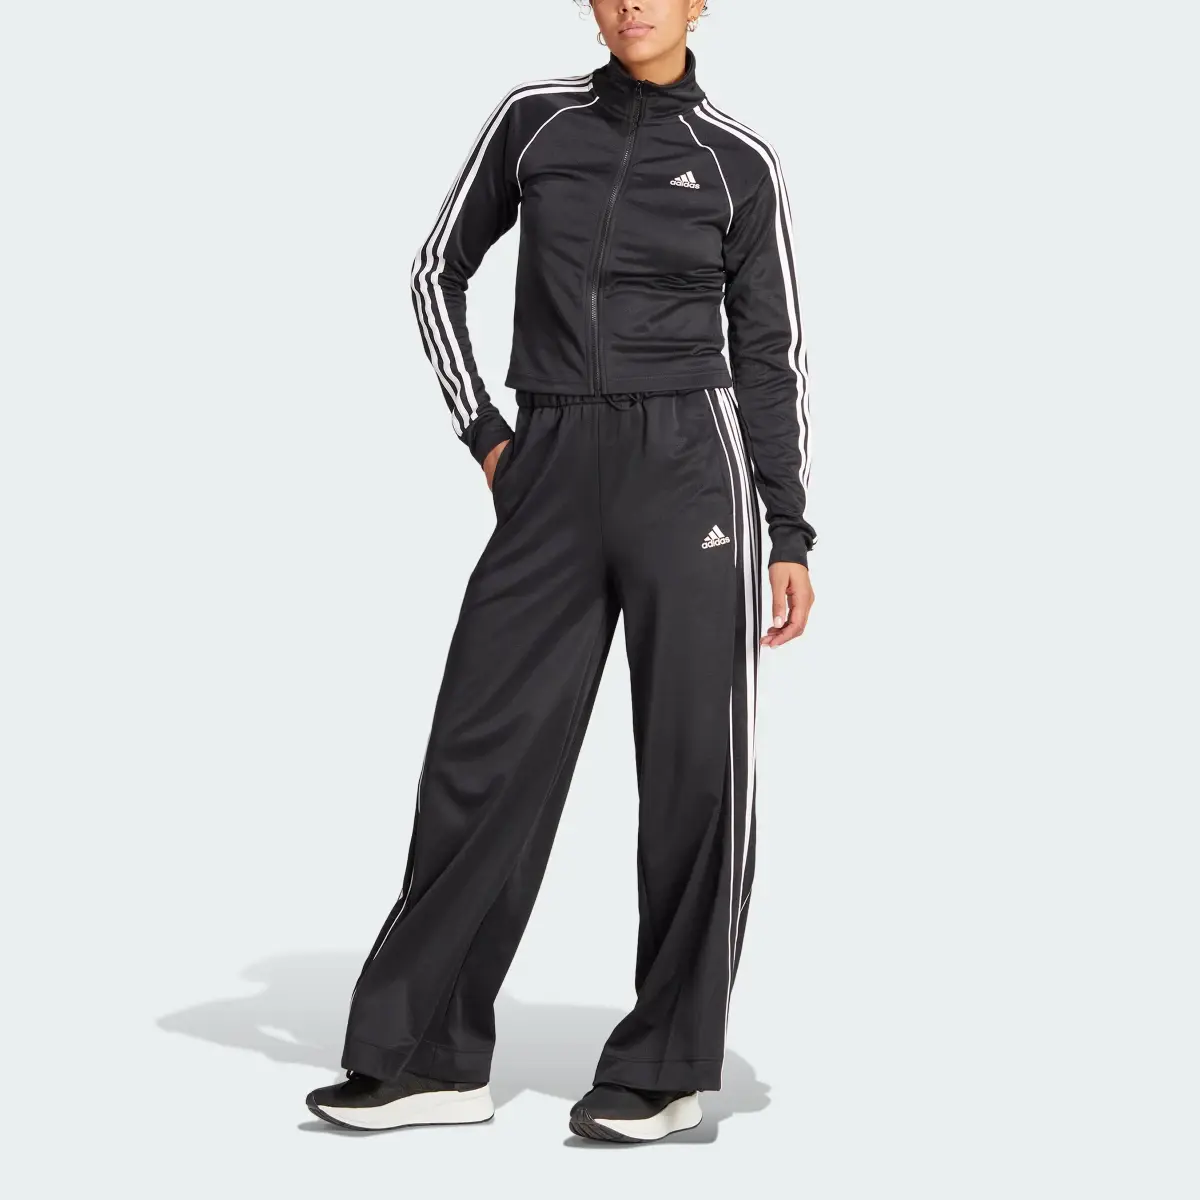 Adidas Track suit Teamsport. 1